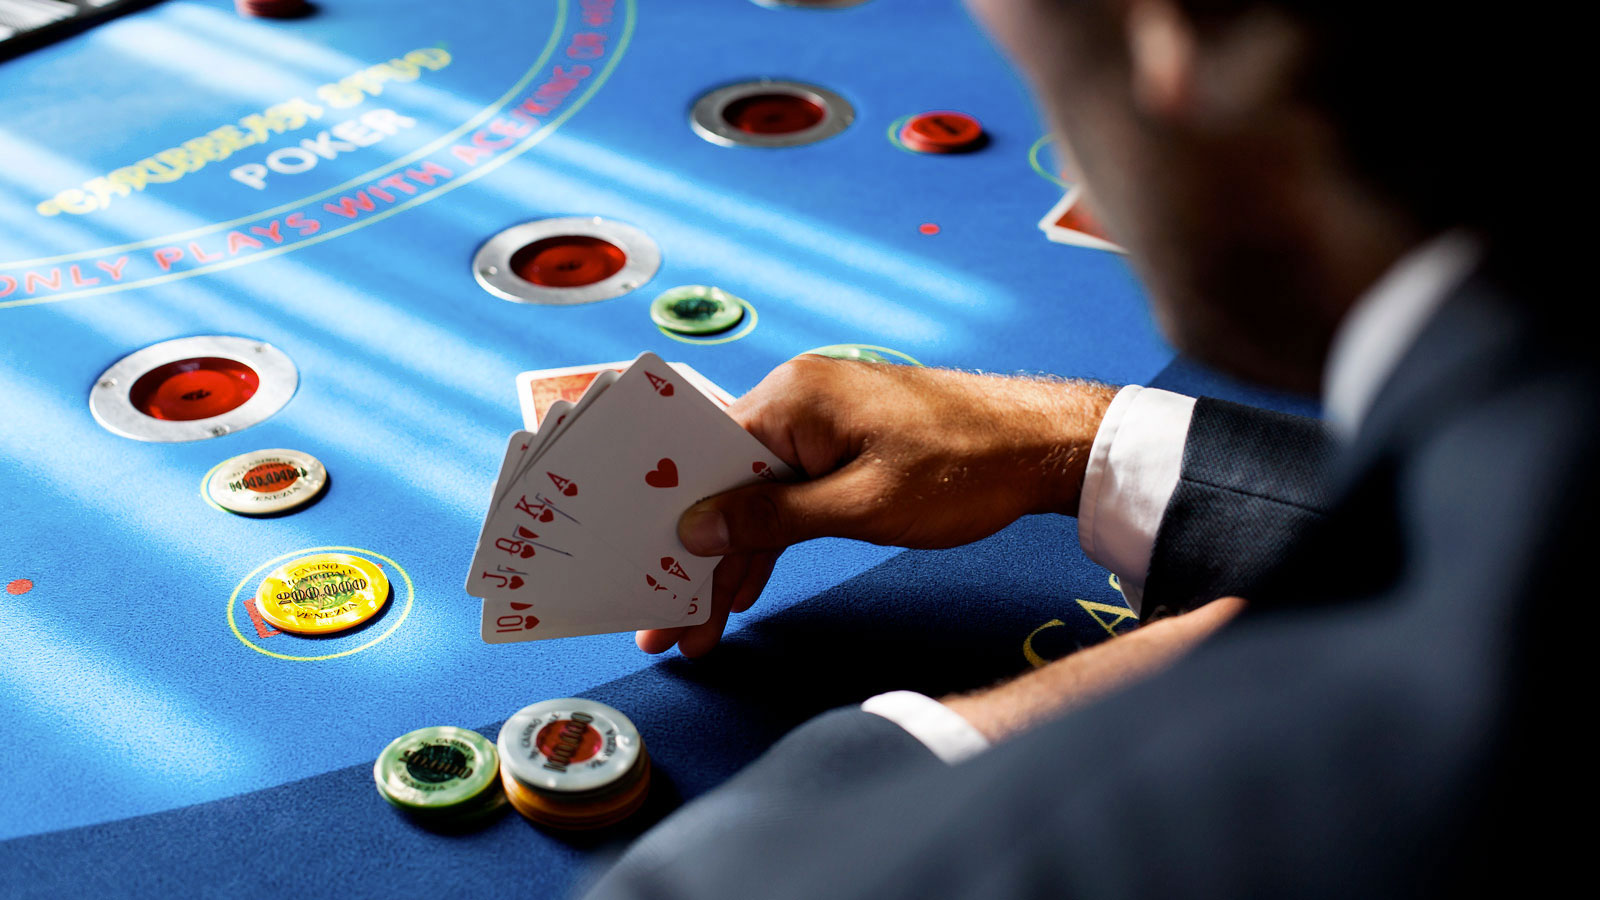 Try to Claim an online casino Bonus